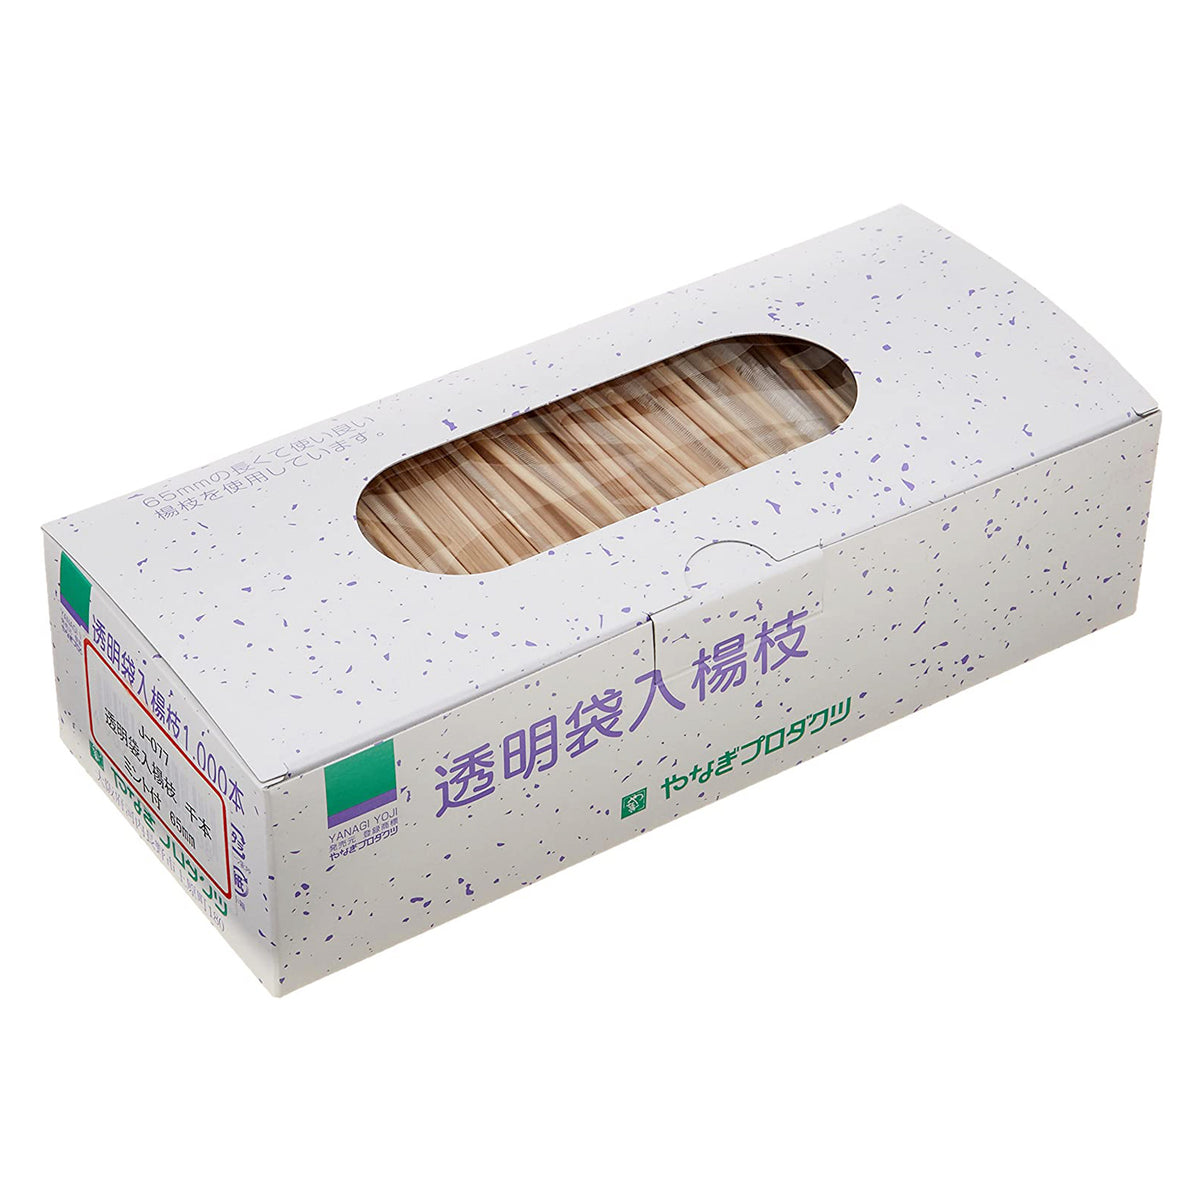 Yanagi Products Wood Flavored Youji Toothpicks 1000 pcs